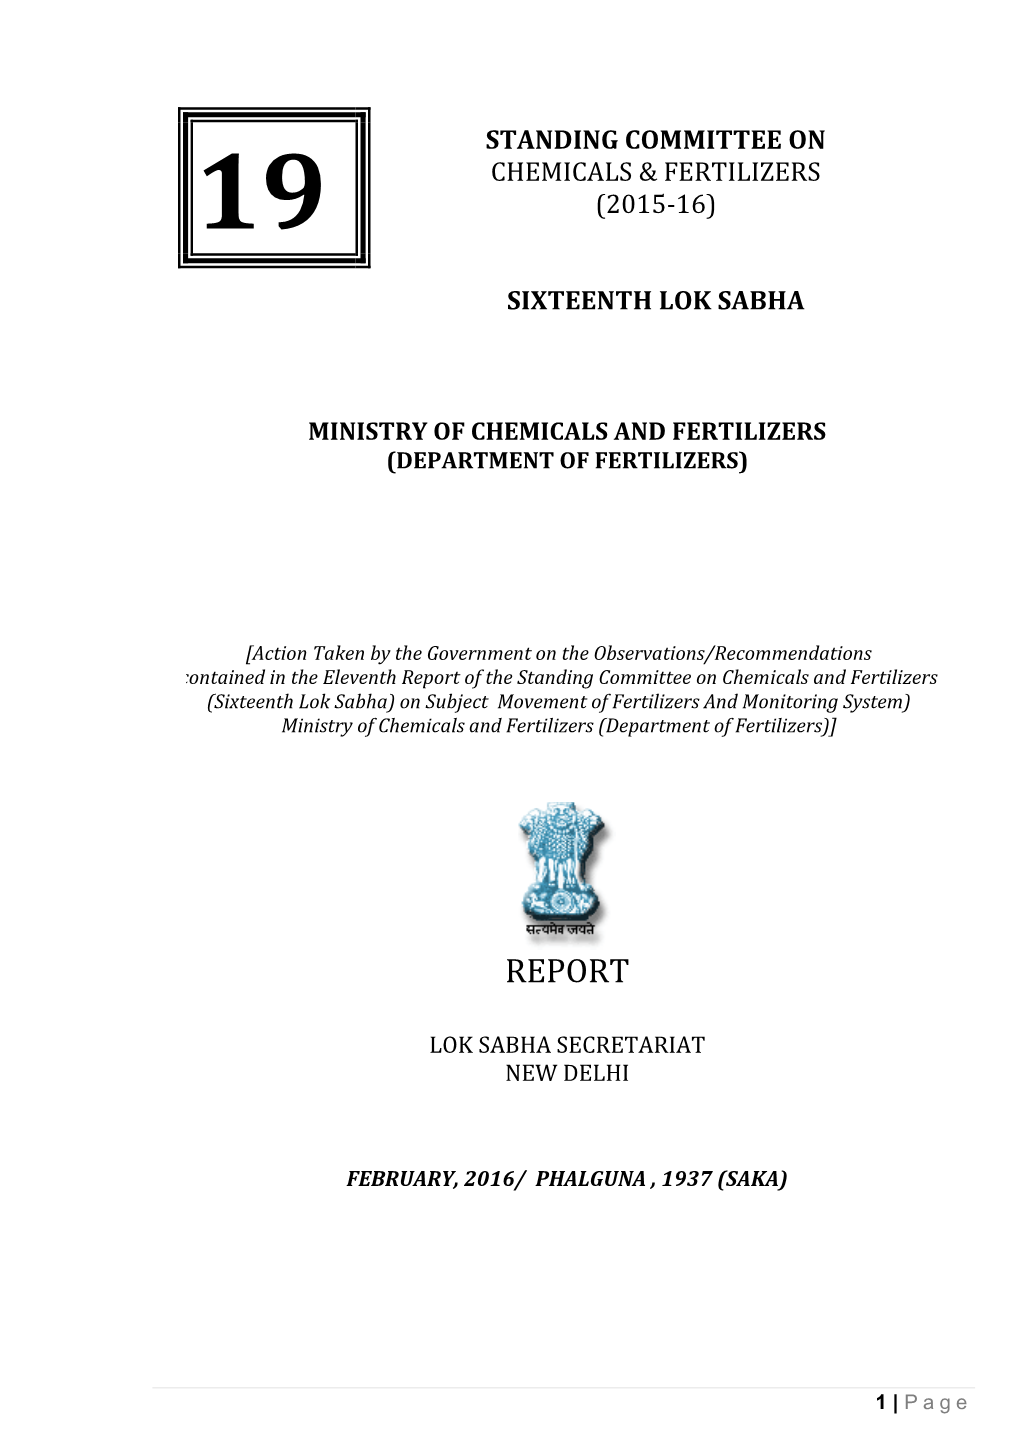 Chemicals & Fertilizers (2015-16) Sixteenth Lok Sabha